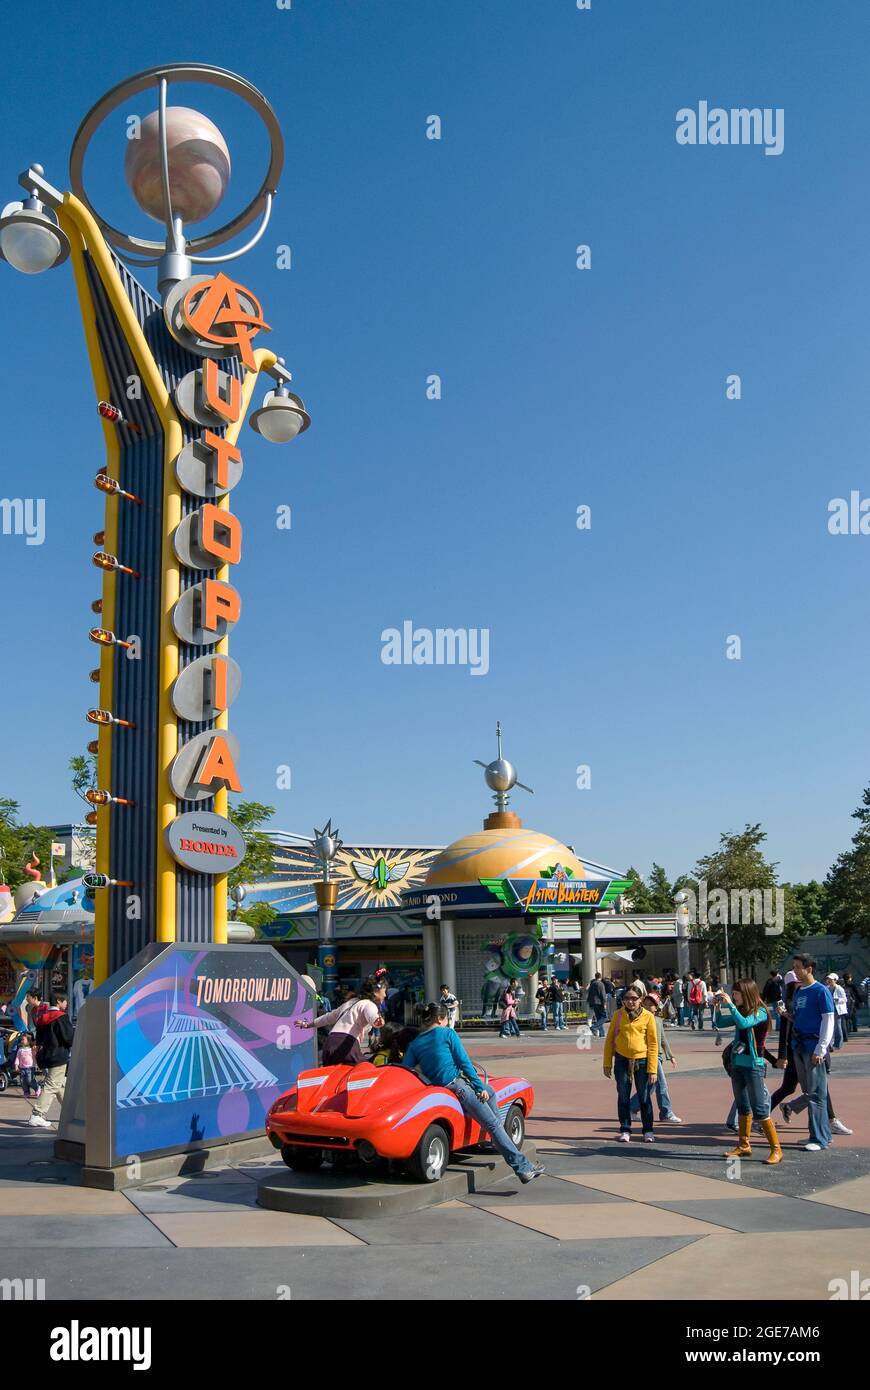 Autopia ride, Tomorrowland, Hong Kong Disneyland Resort, l'Isola di Lantau, Hong Kong, Repubblica Popolare di Cina Foto Stock